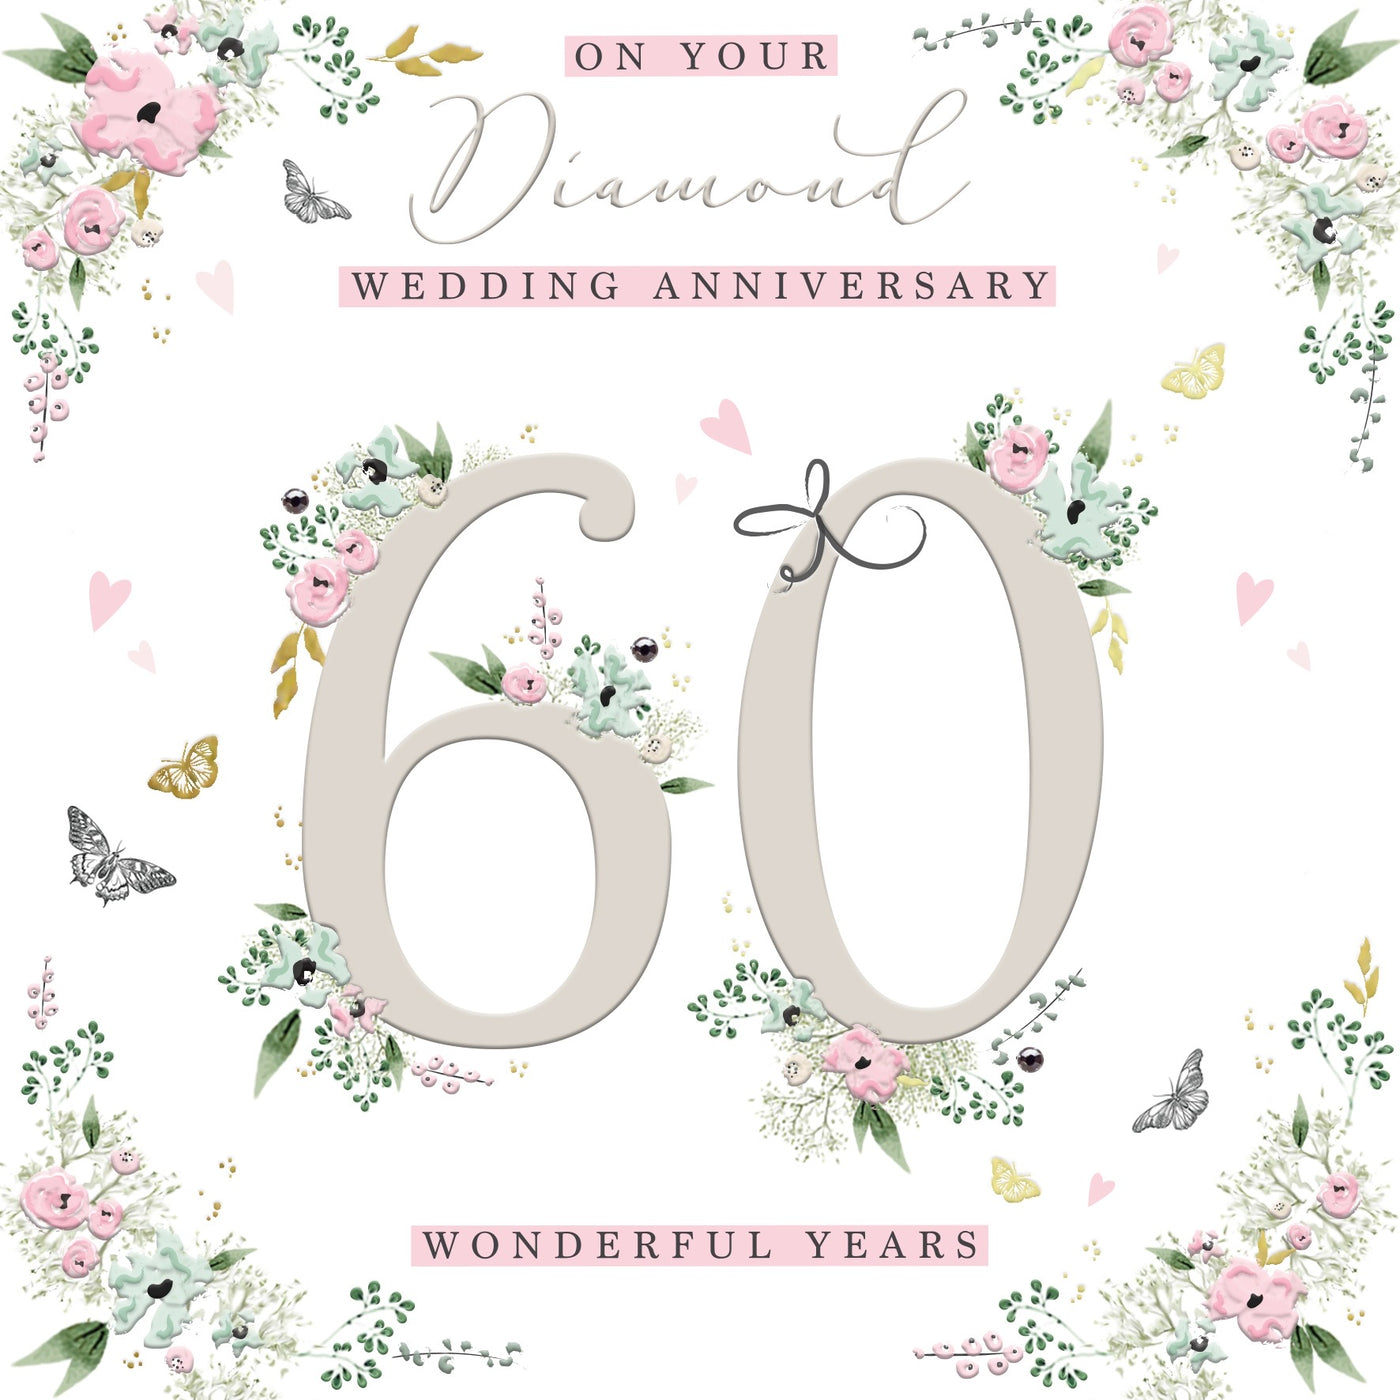 Diamond Wedding Anniversary 60 Wonderful Years Card